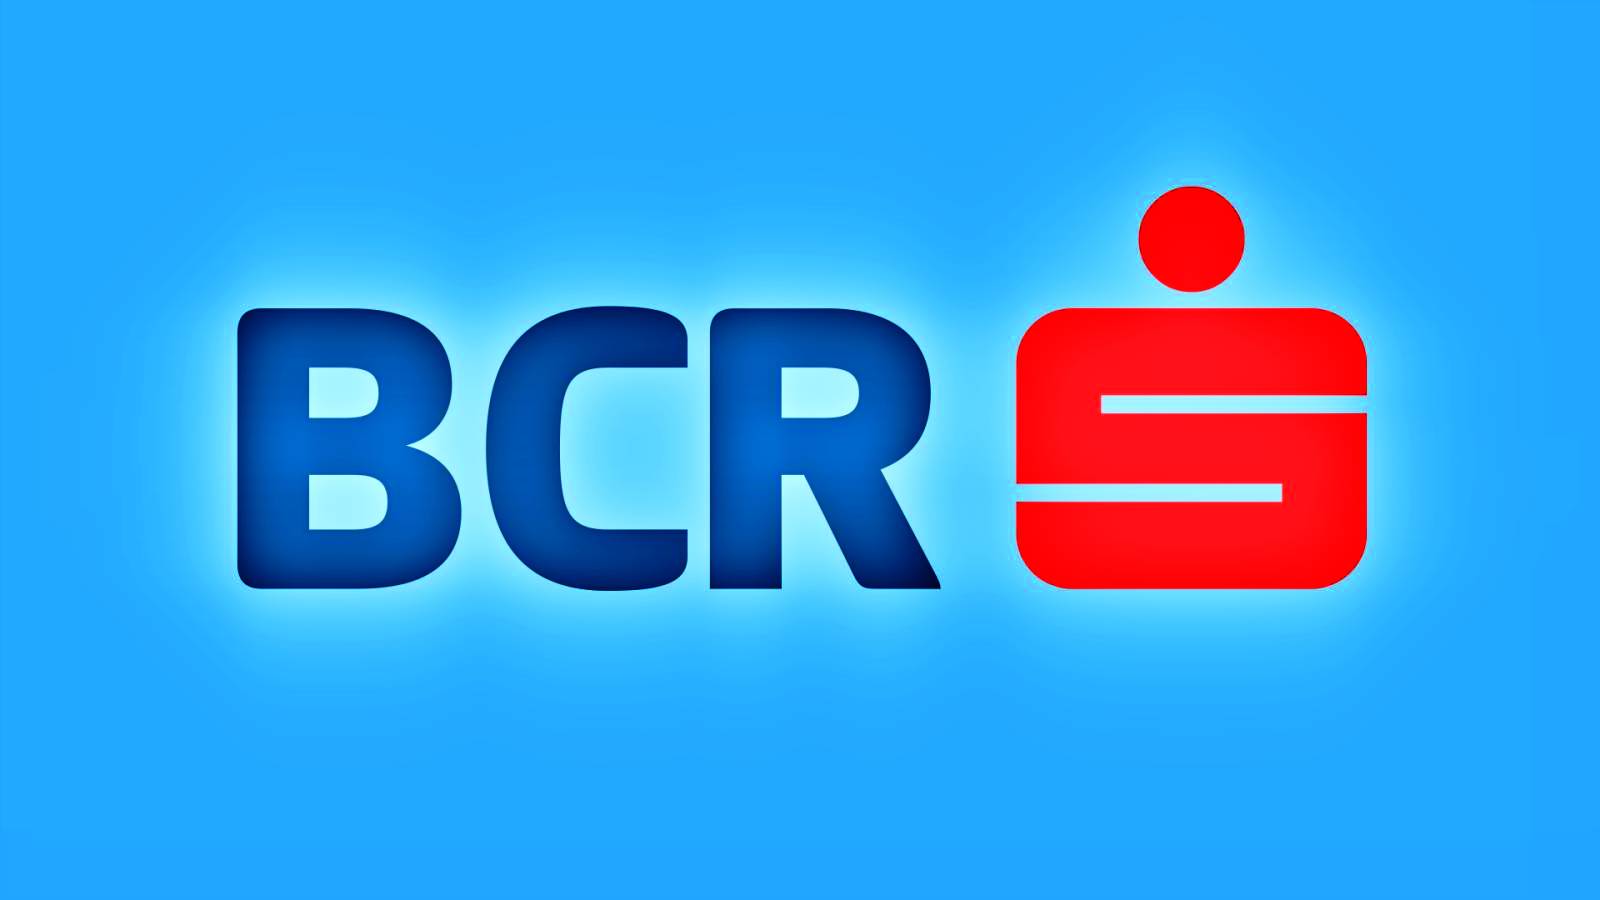 BCR Romania pays